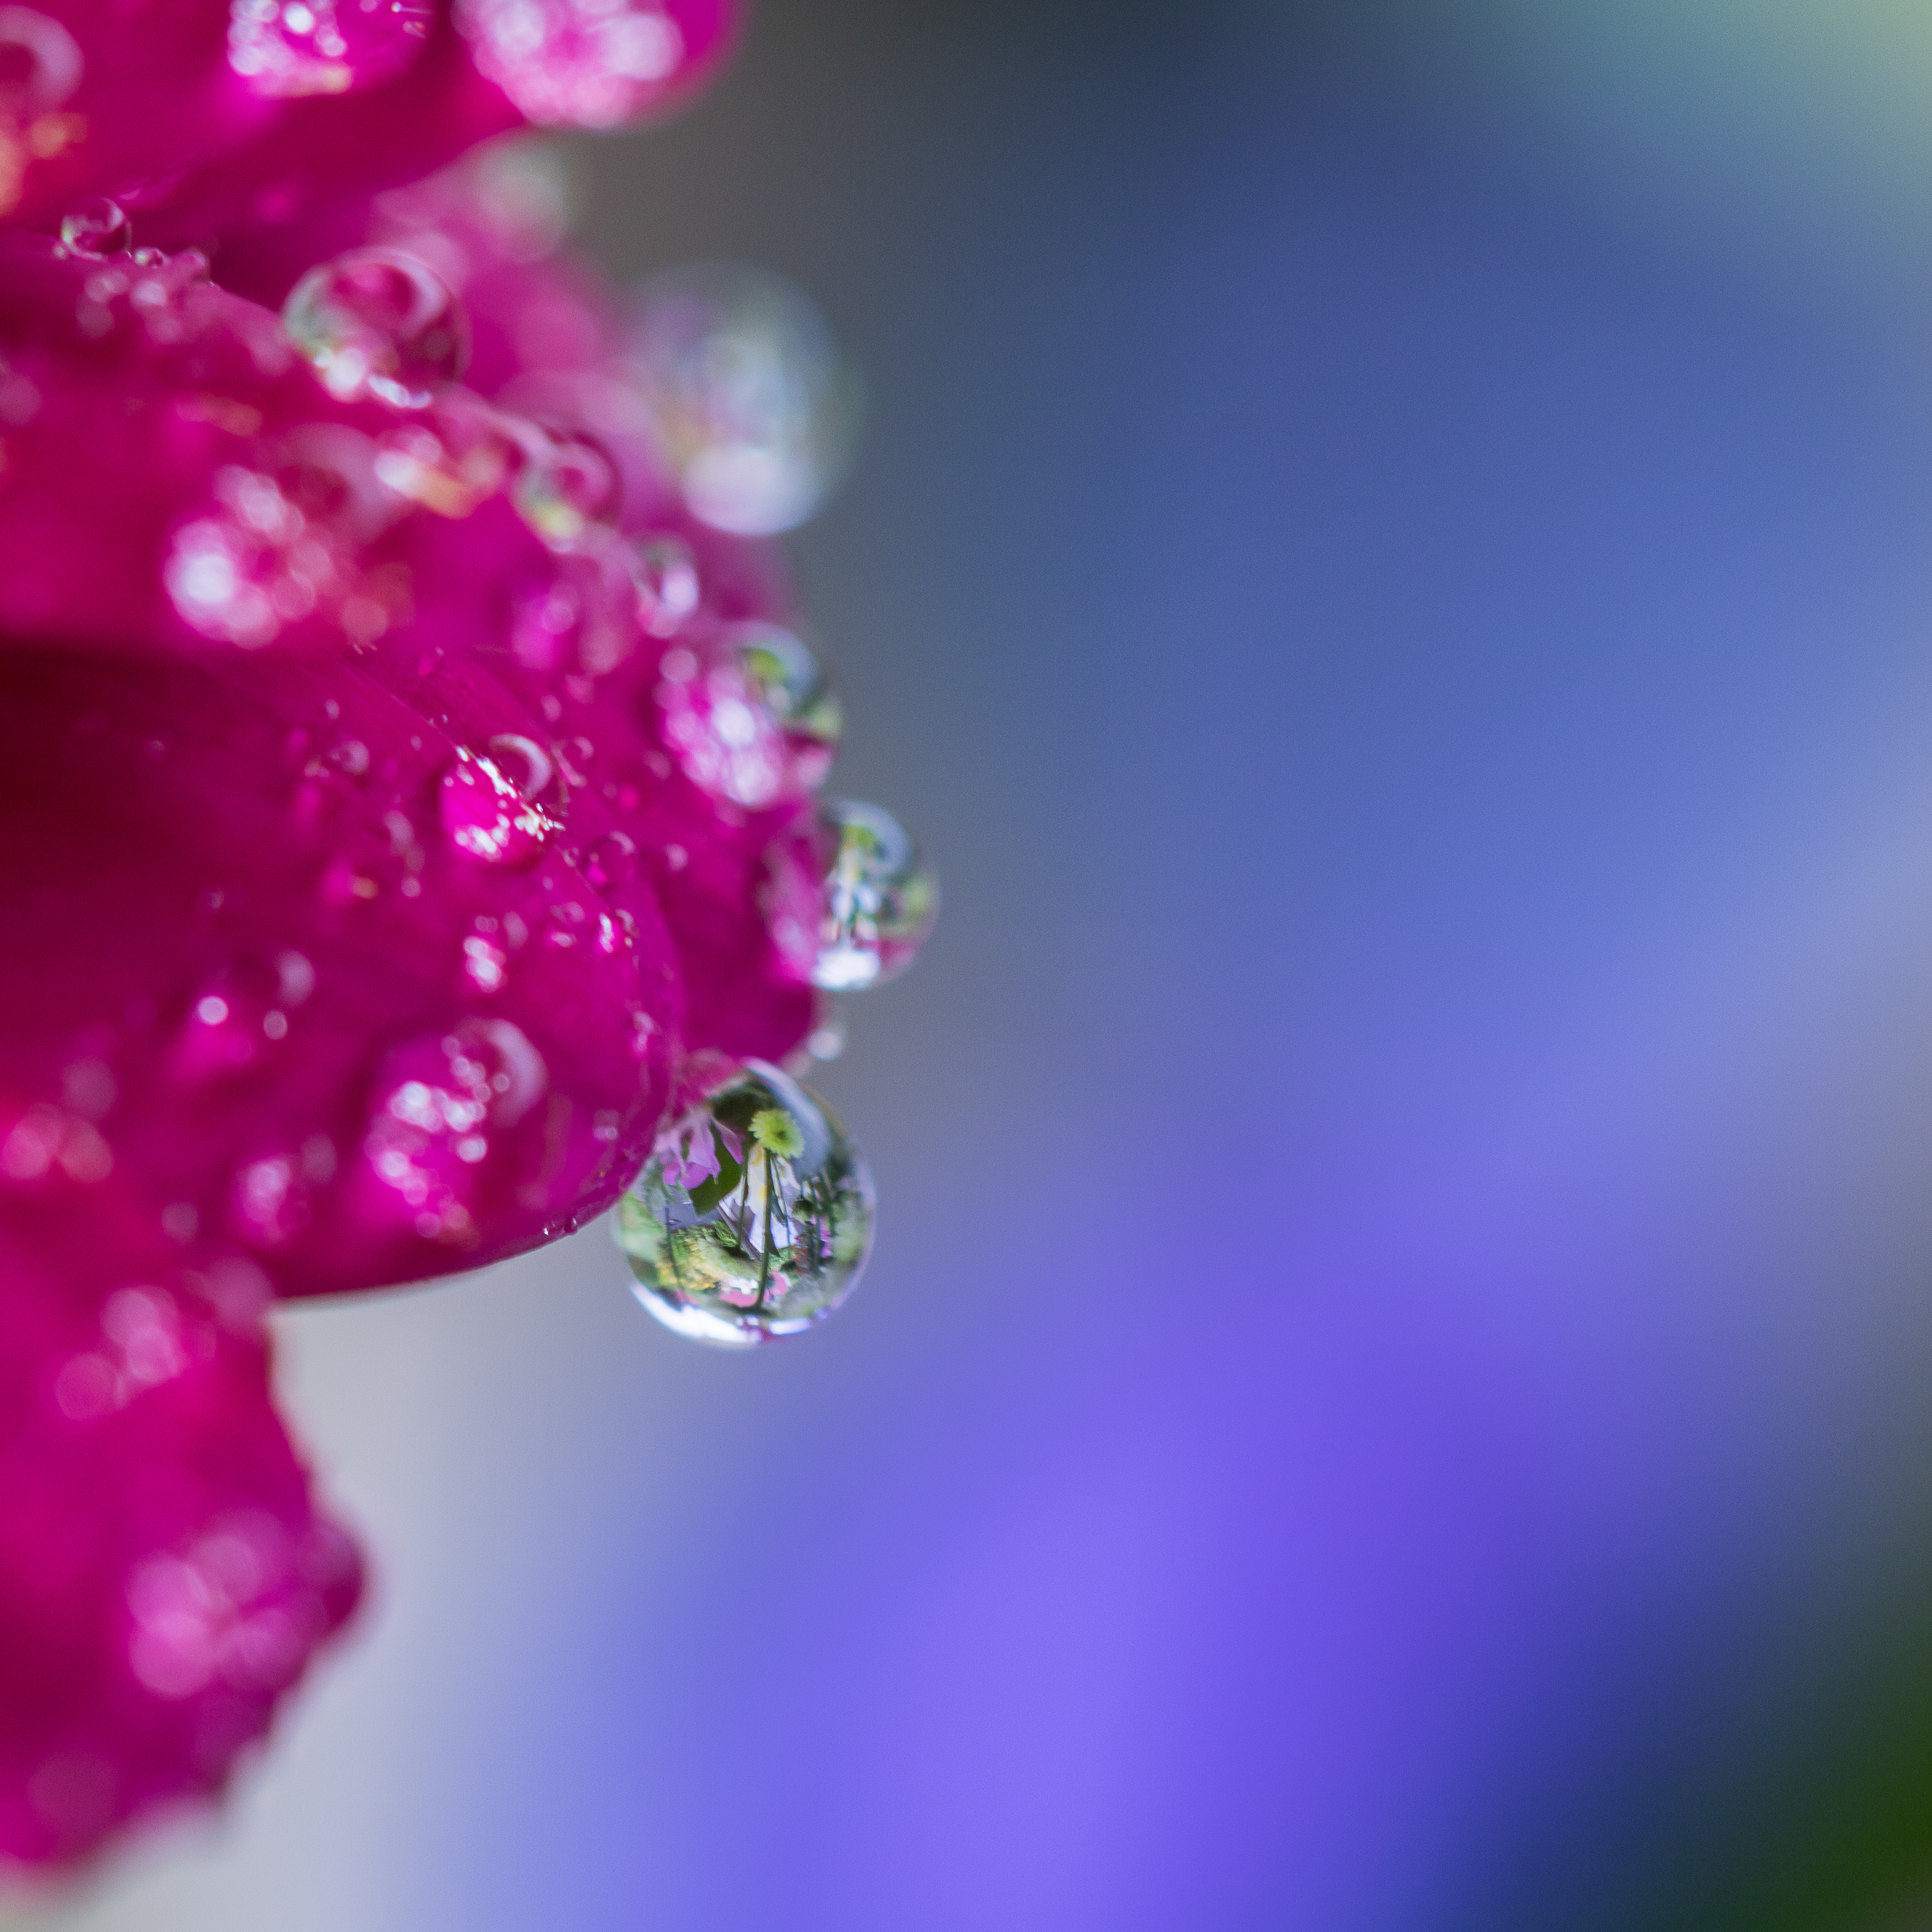 macro, reflection, drop, flower